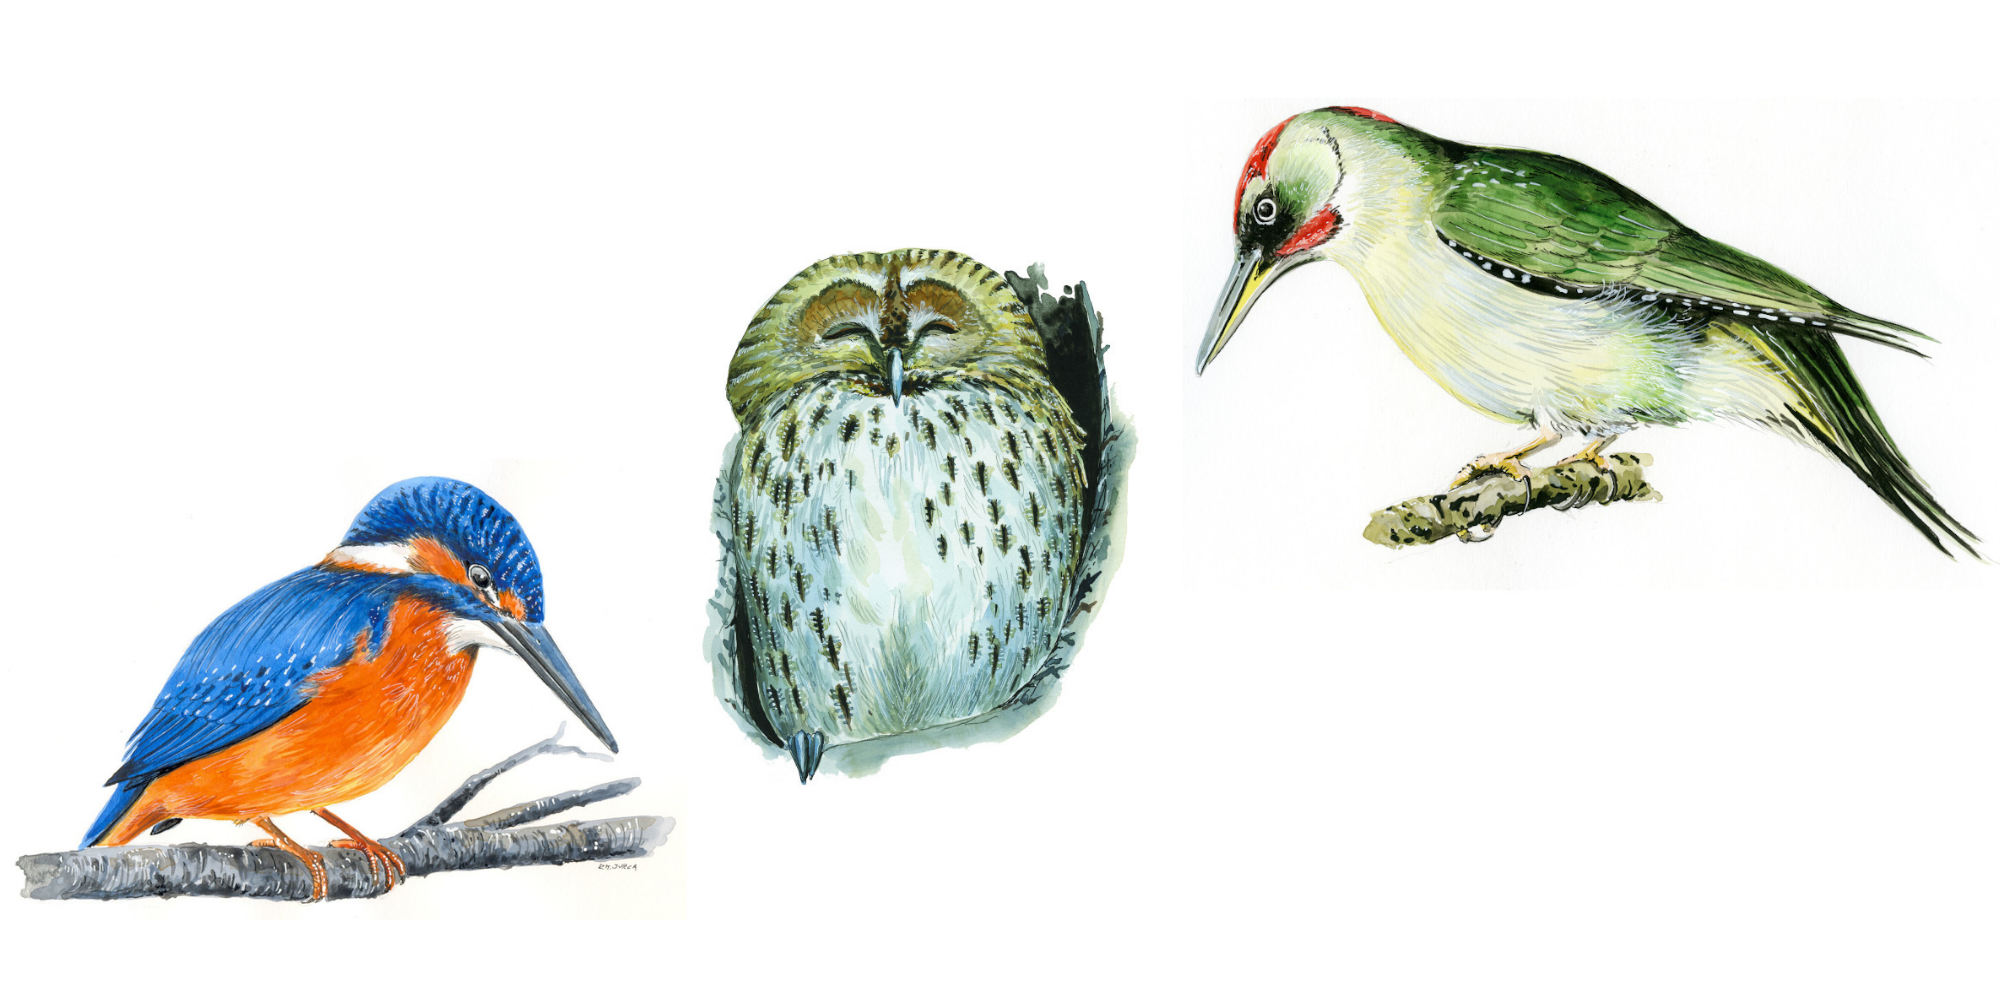 Kingfisher, Tawny Owl and European Green Wodpecker